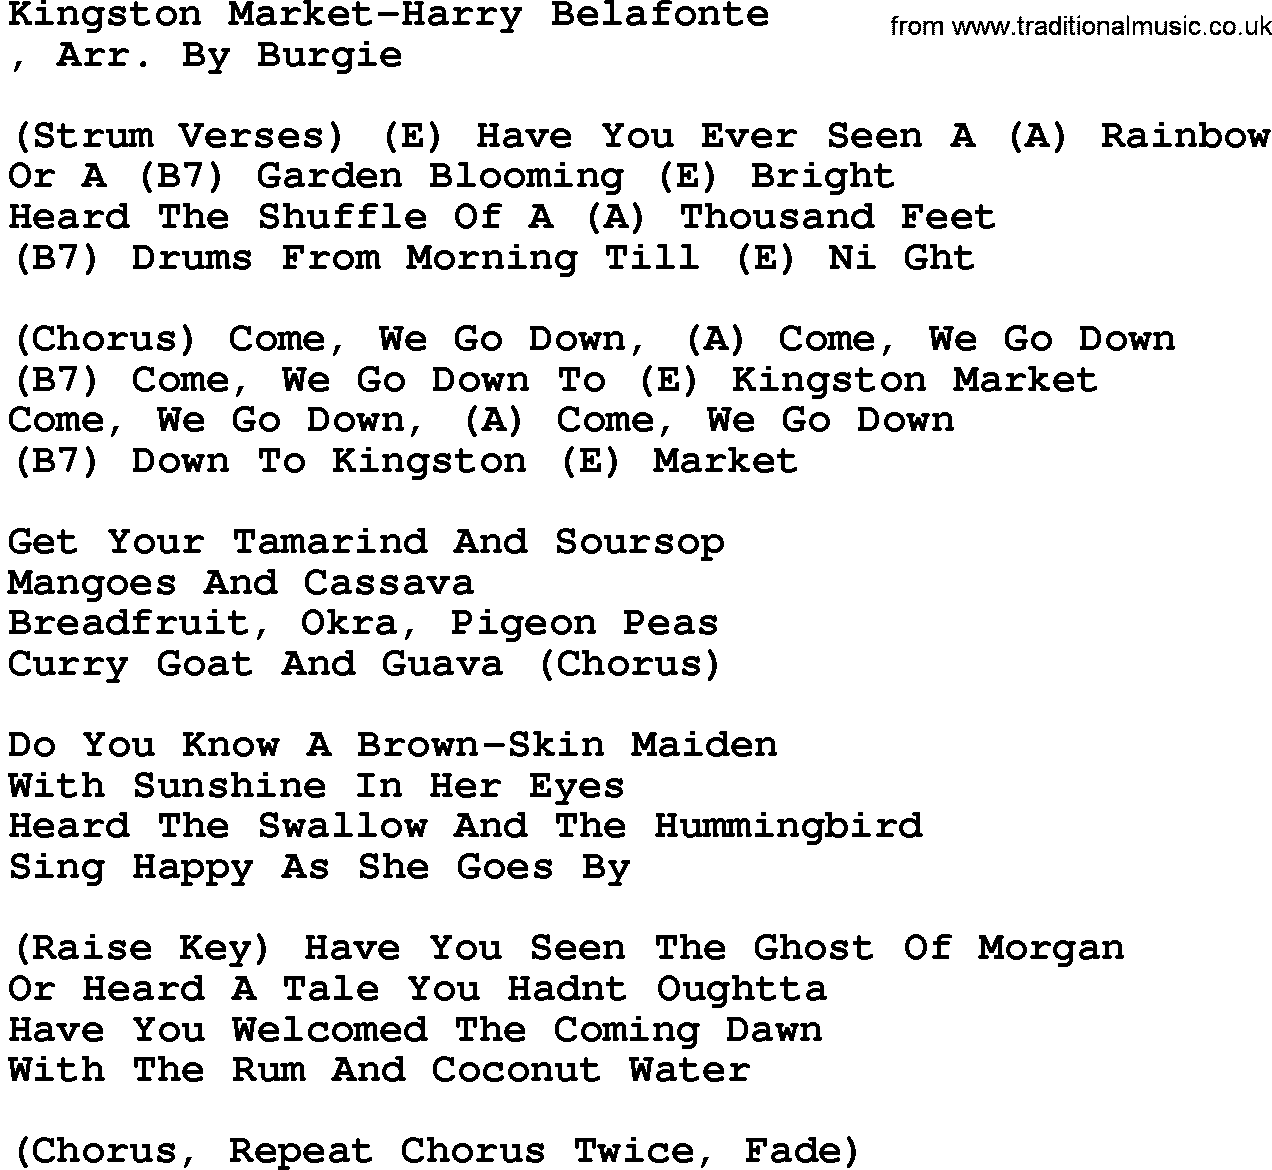 Country Music:Kingston Market-Harry Belafonte Lyrics and Chords1272 x 1170